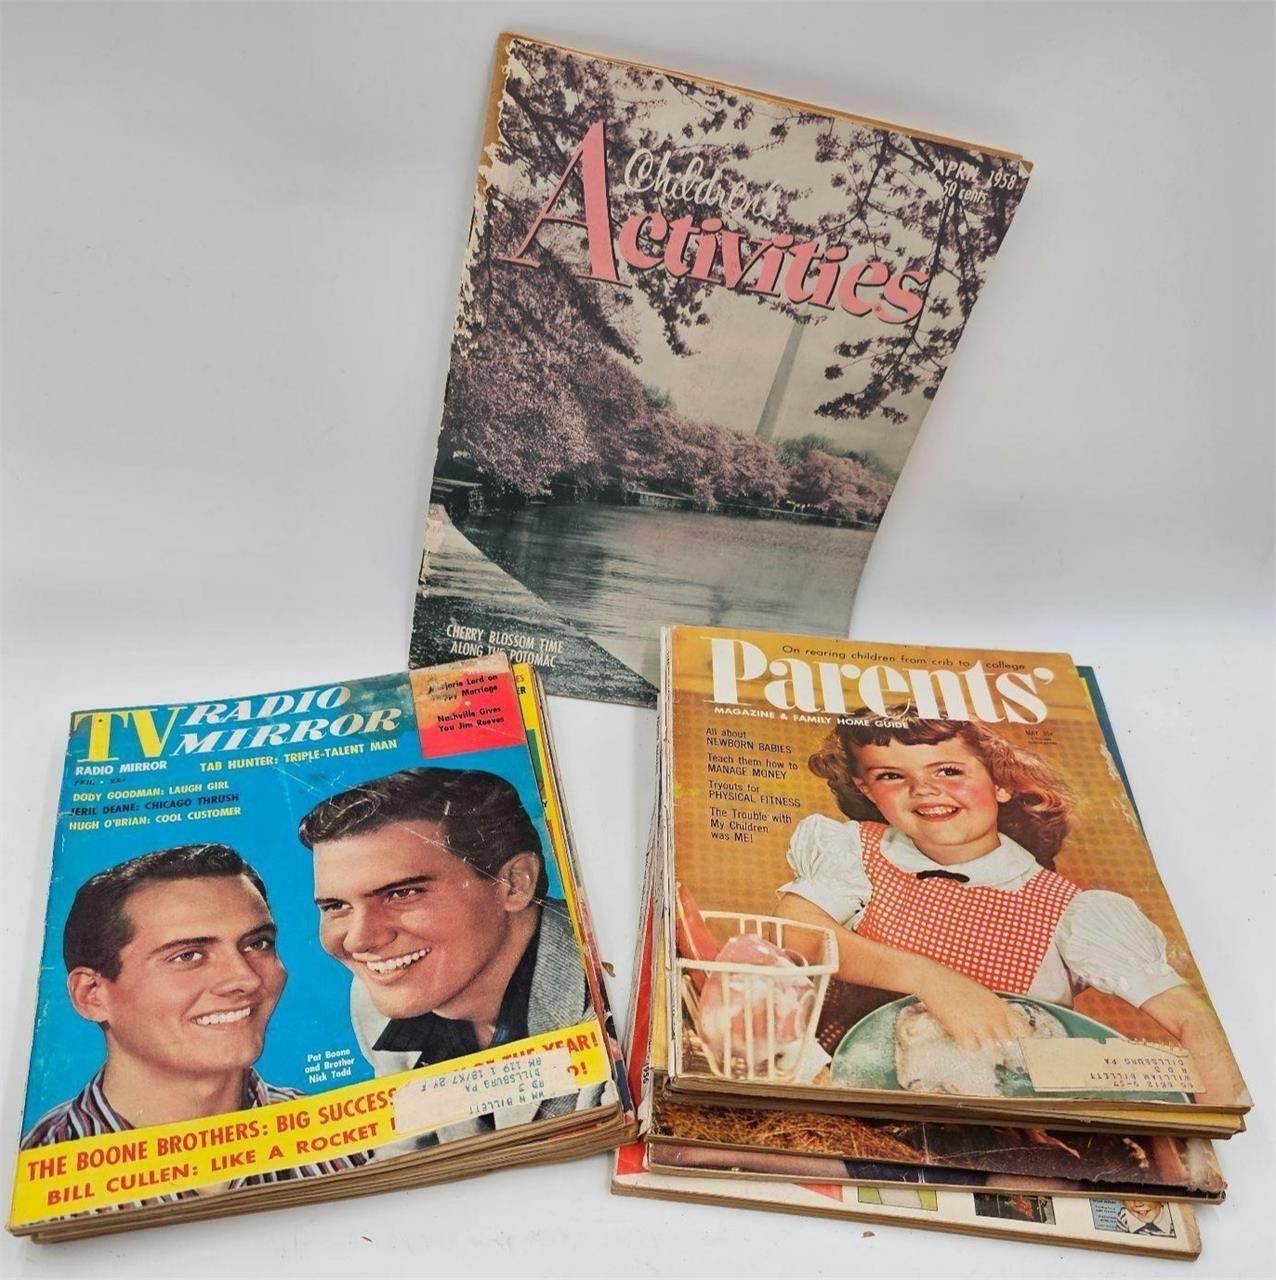 TV radio magazines and parent magazines